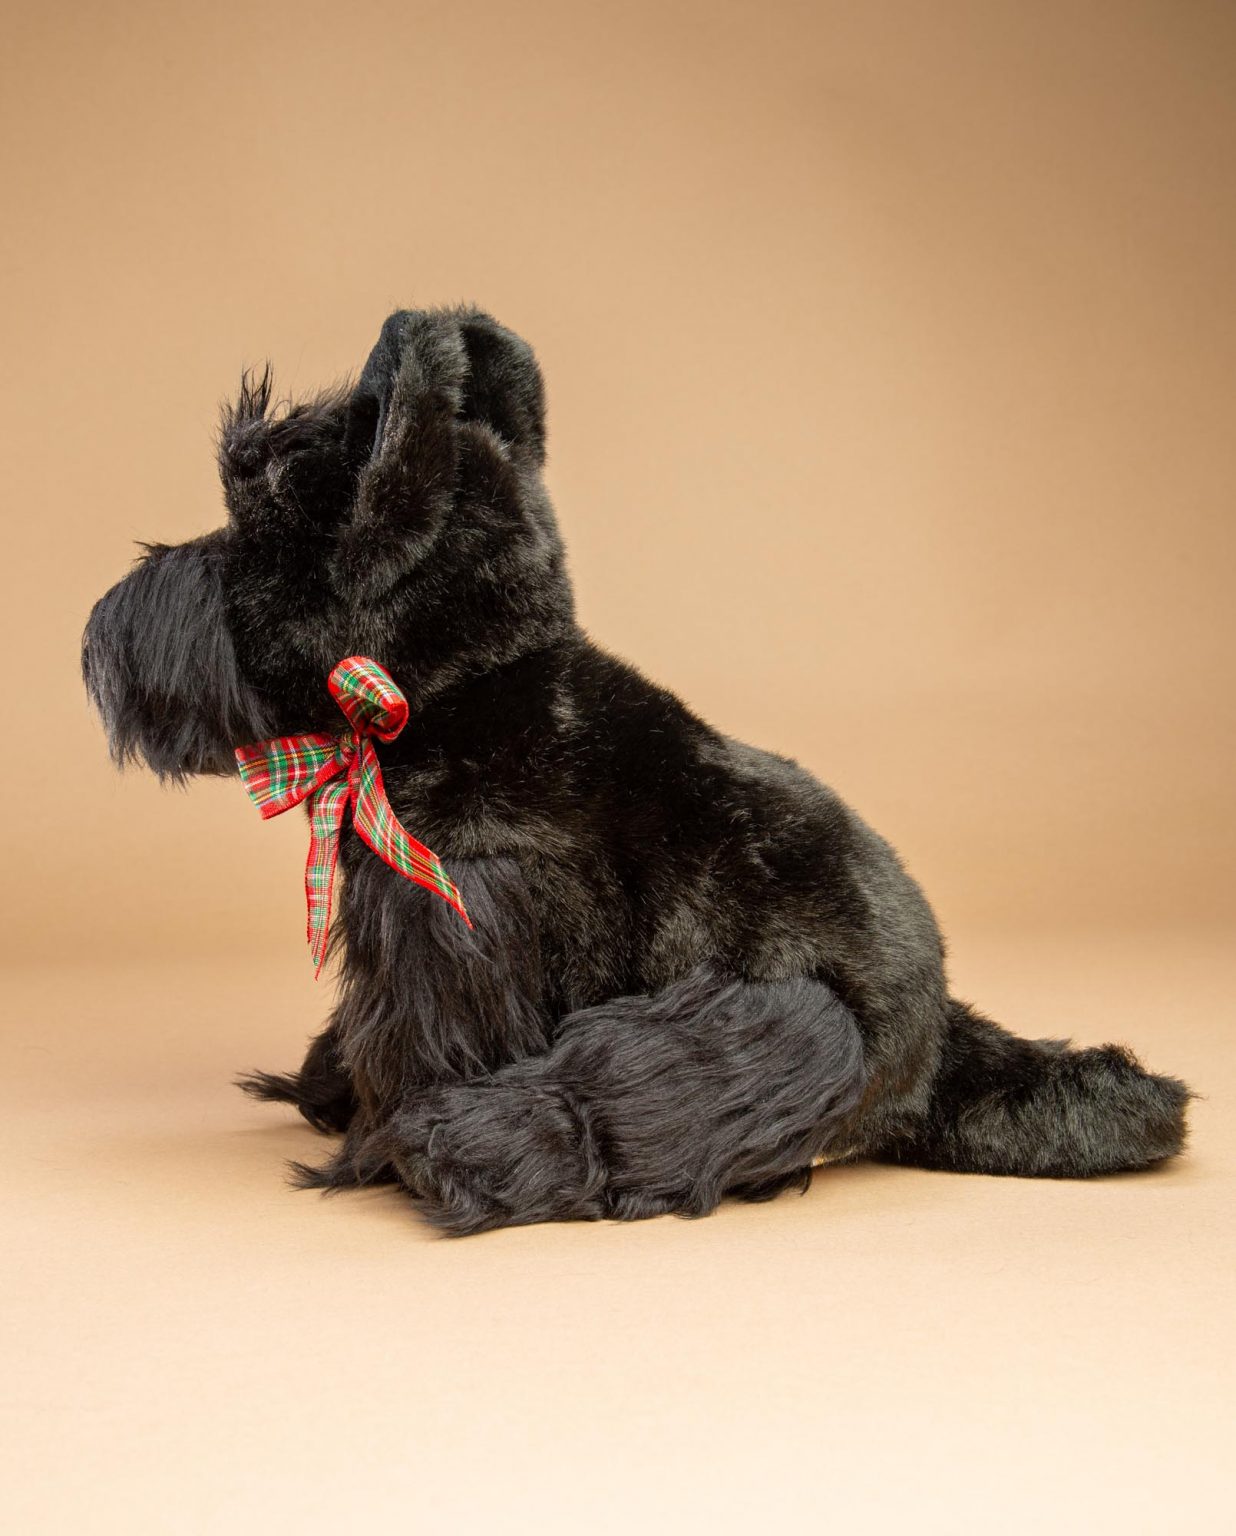 Scottish Terrier dog soft toy gift idea - Send a Cuddly